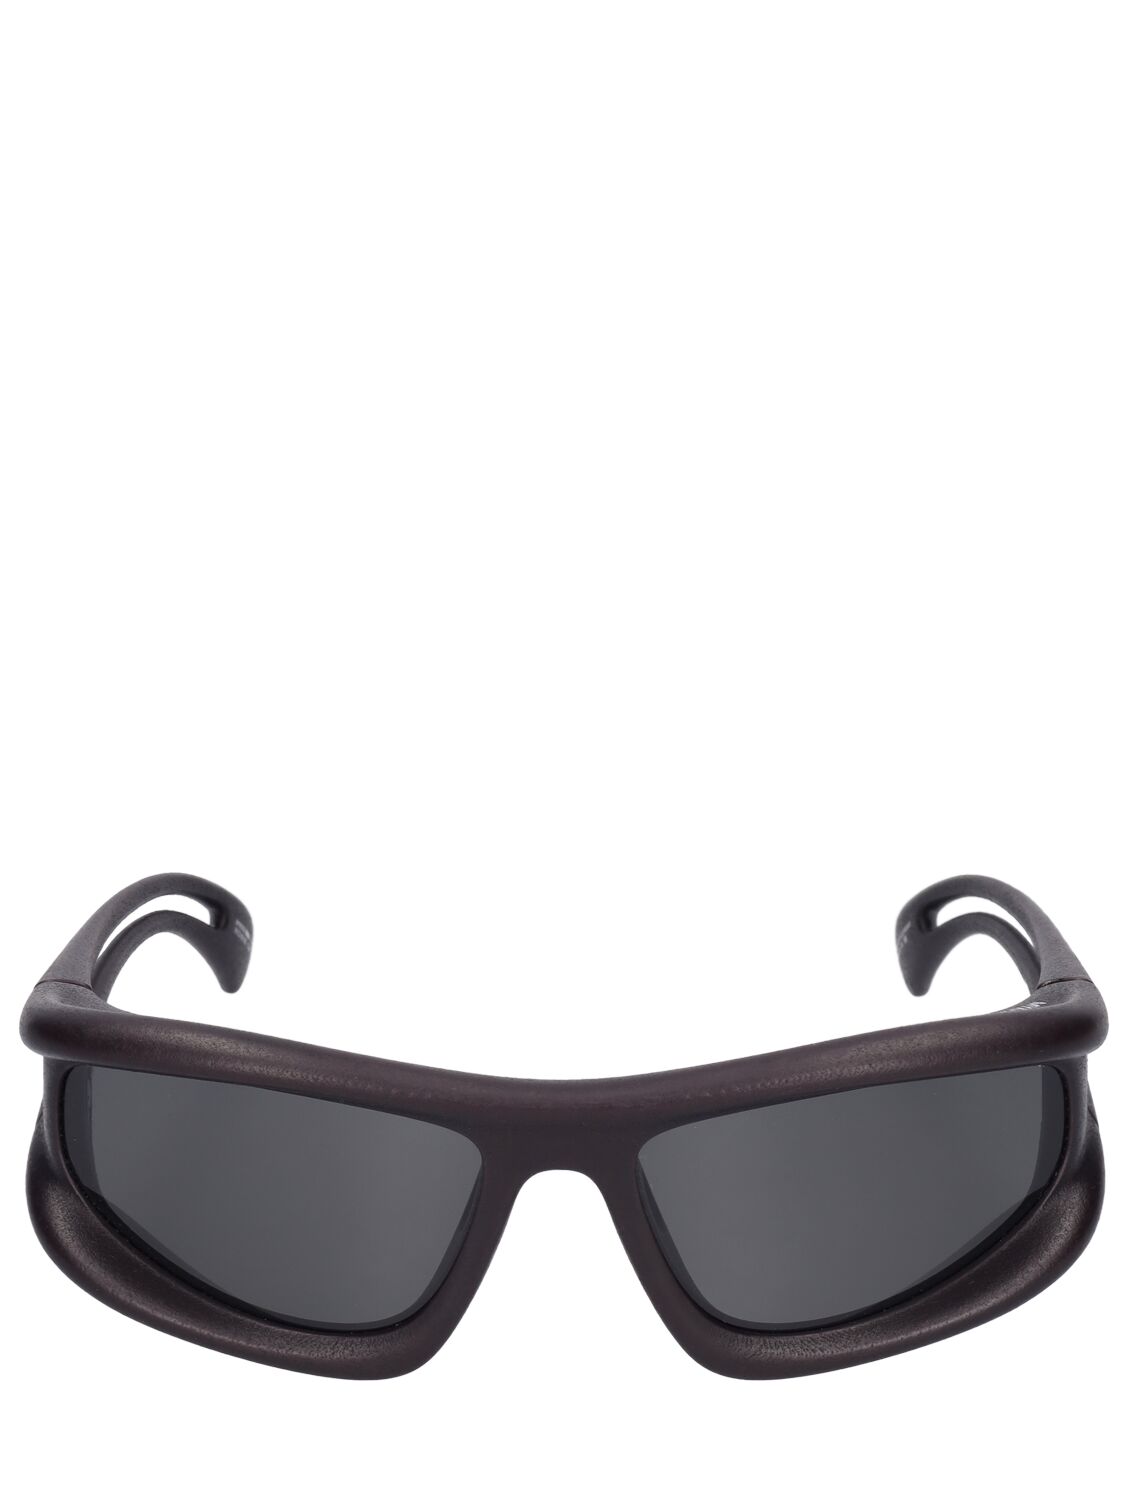 Image of Marfa 032c Sunglasses